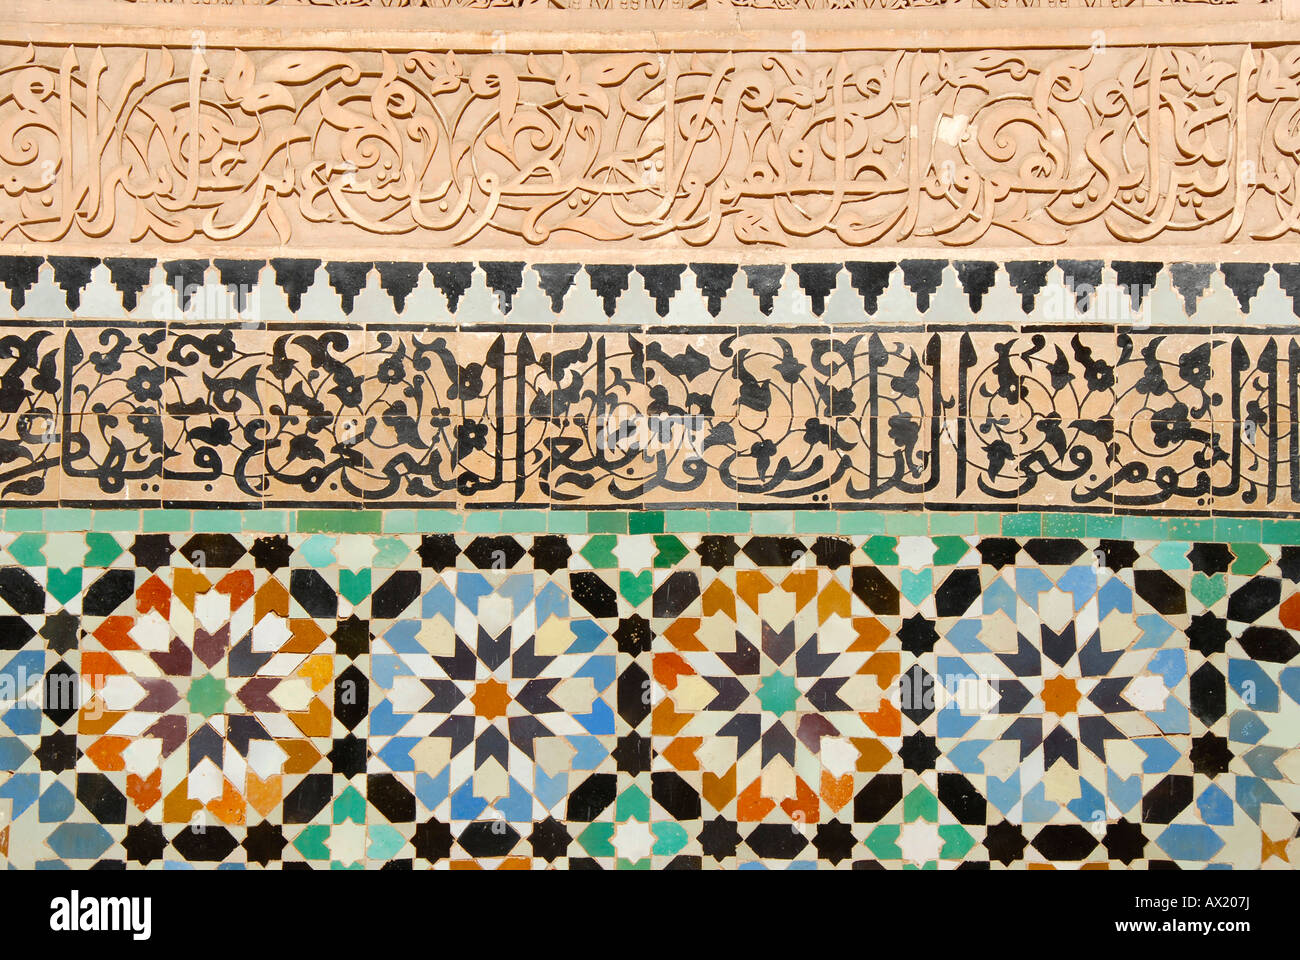 Kunstvolle Wand mit bunten Kacheln und Stuck Ali Ben Youssef Medersa Medina Marrakesch Marokko Stockfoto